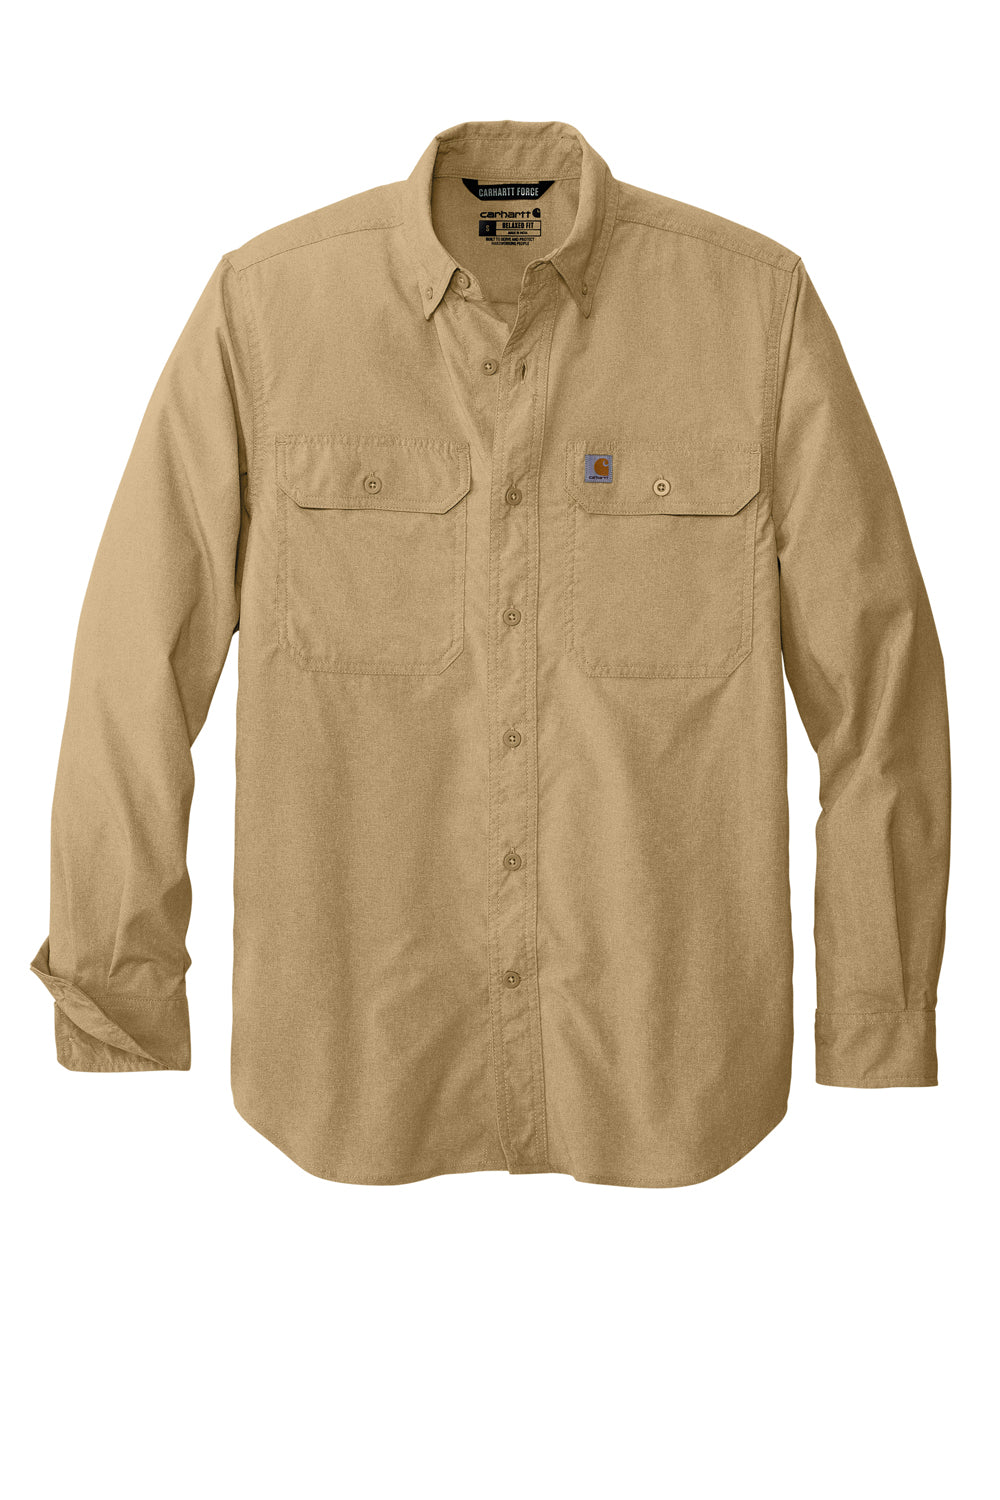 Carhartt CT105291 Mens Force Moisture Wicking Long Sleeve Button Down Shirt w/ Double Pockets Dark Khaki Brown Flat Front